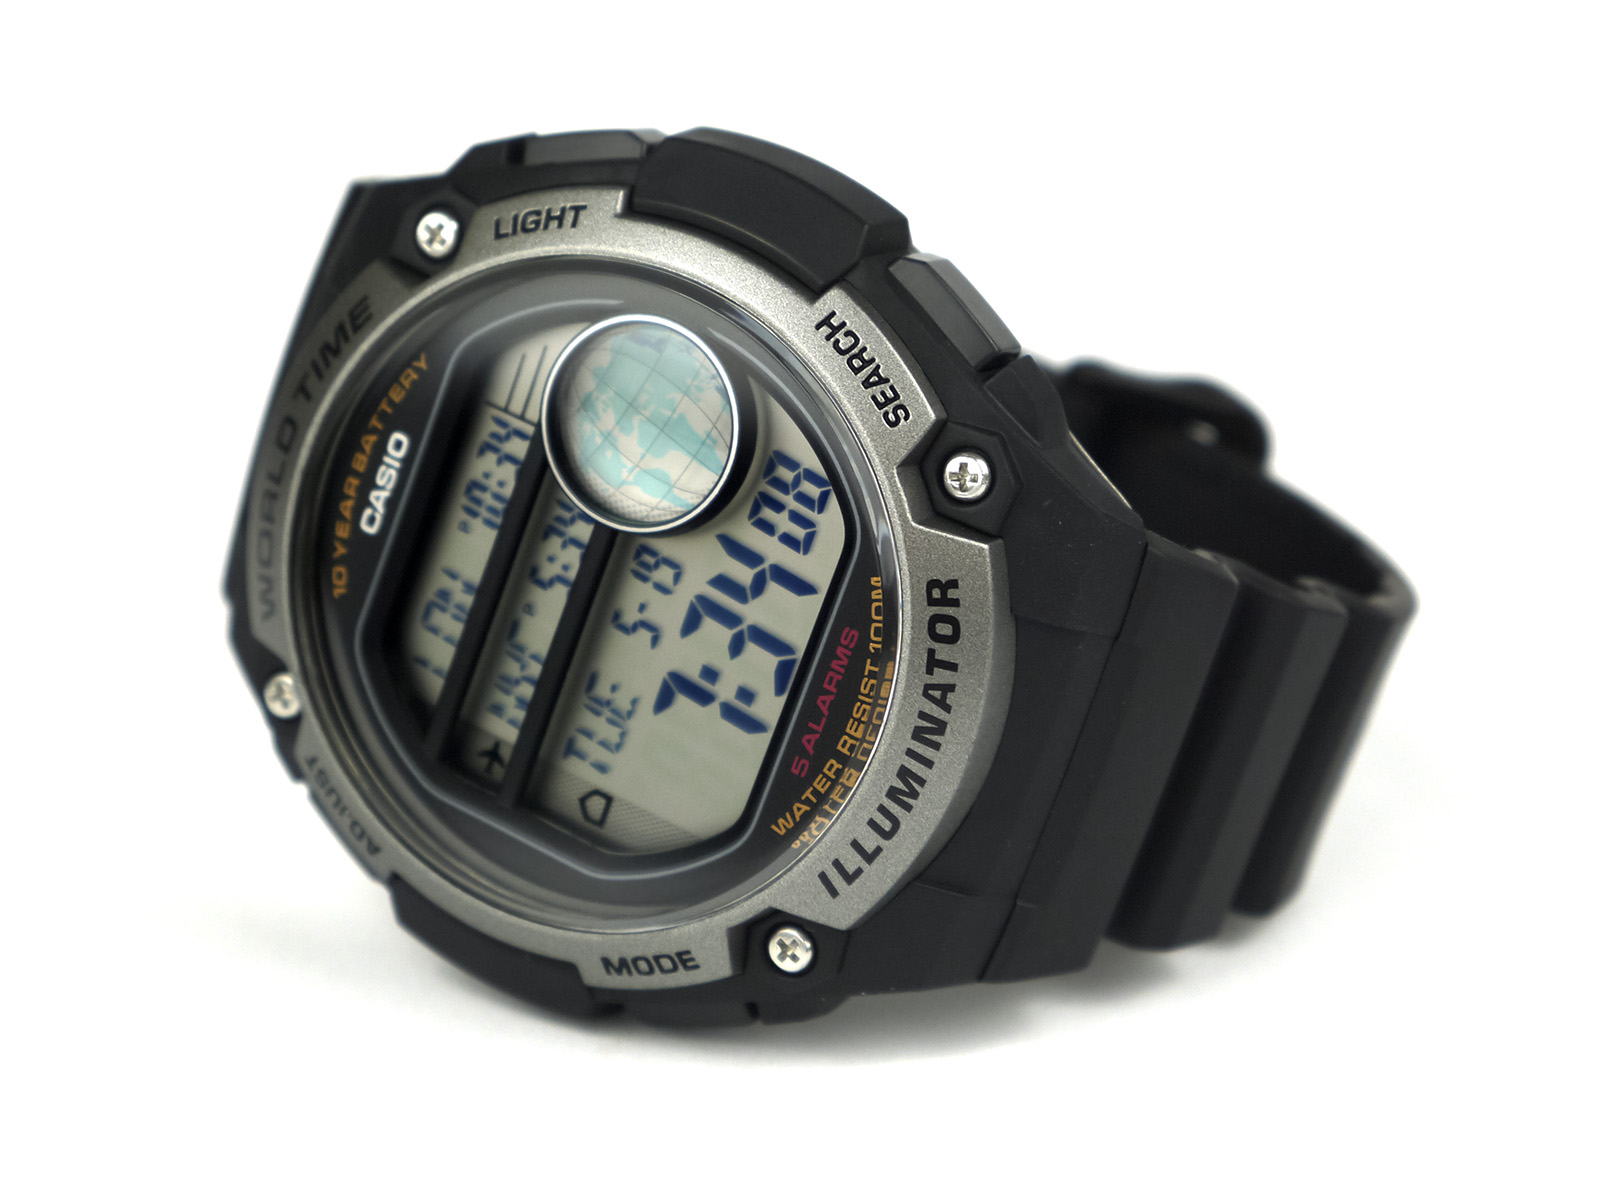 Casio AE-3000W-1AV World Time Watch